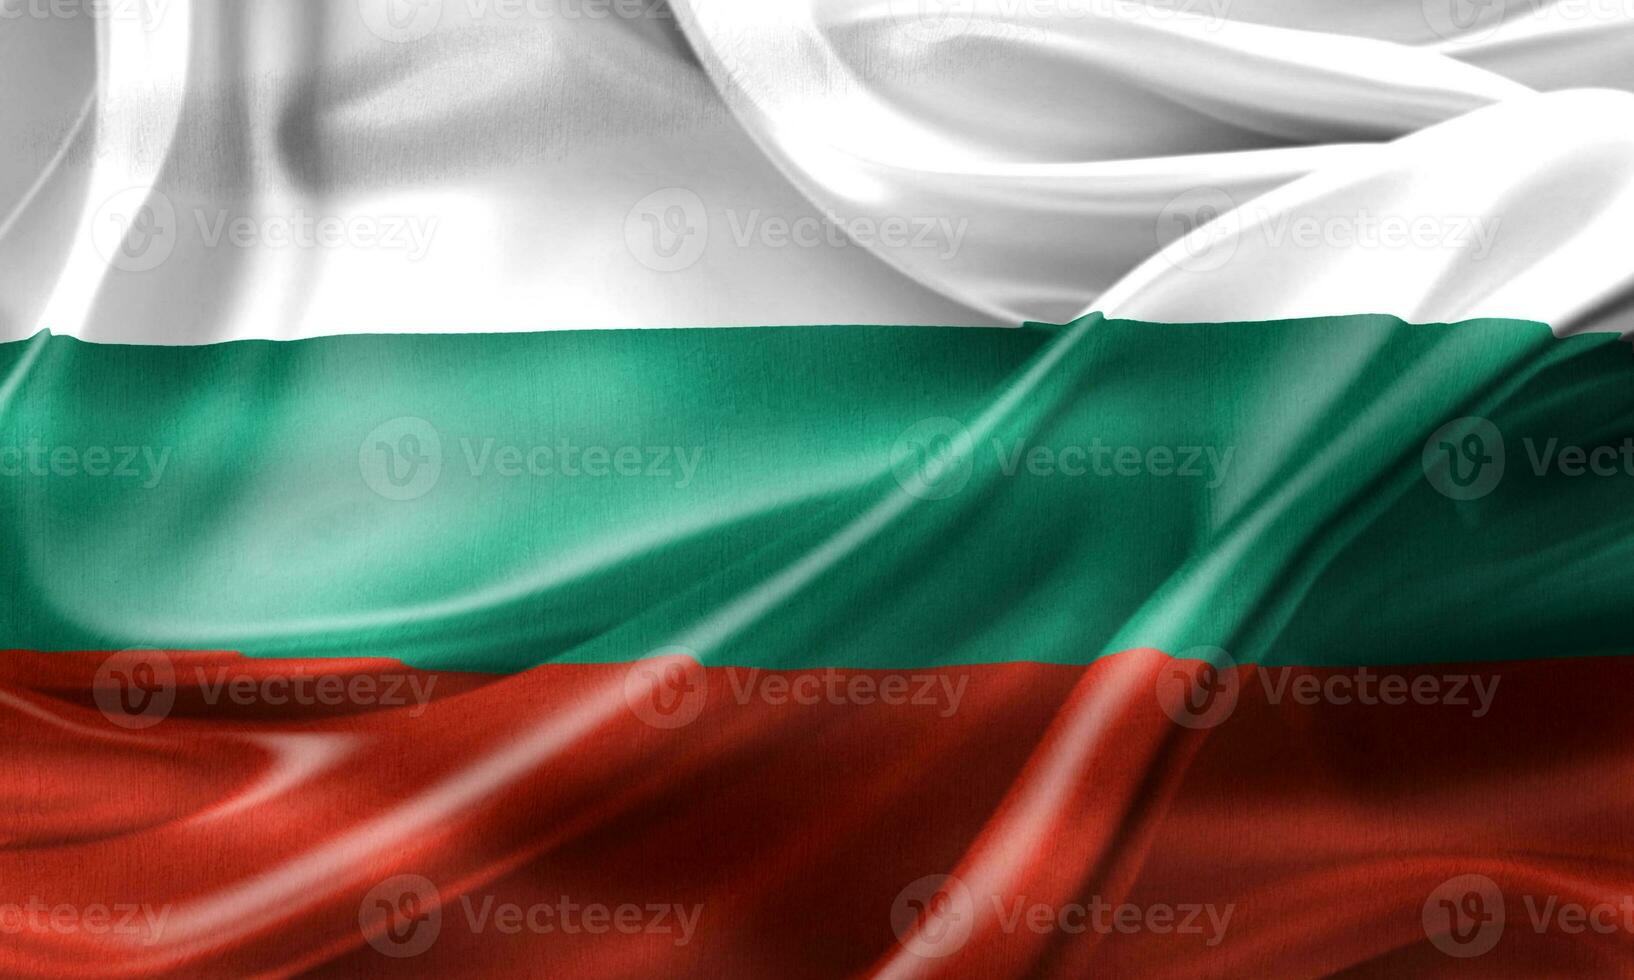 Bulgariens flagga - realistiskt viftande tygflagga foto